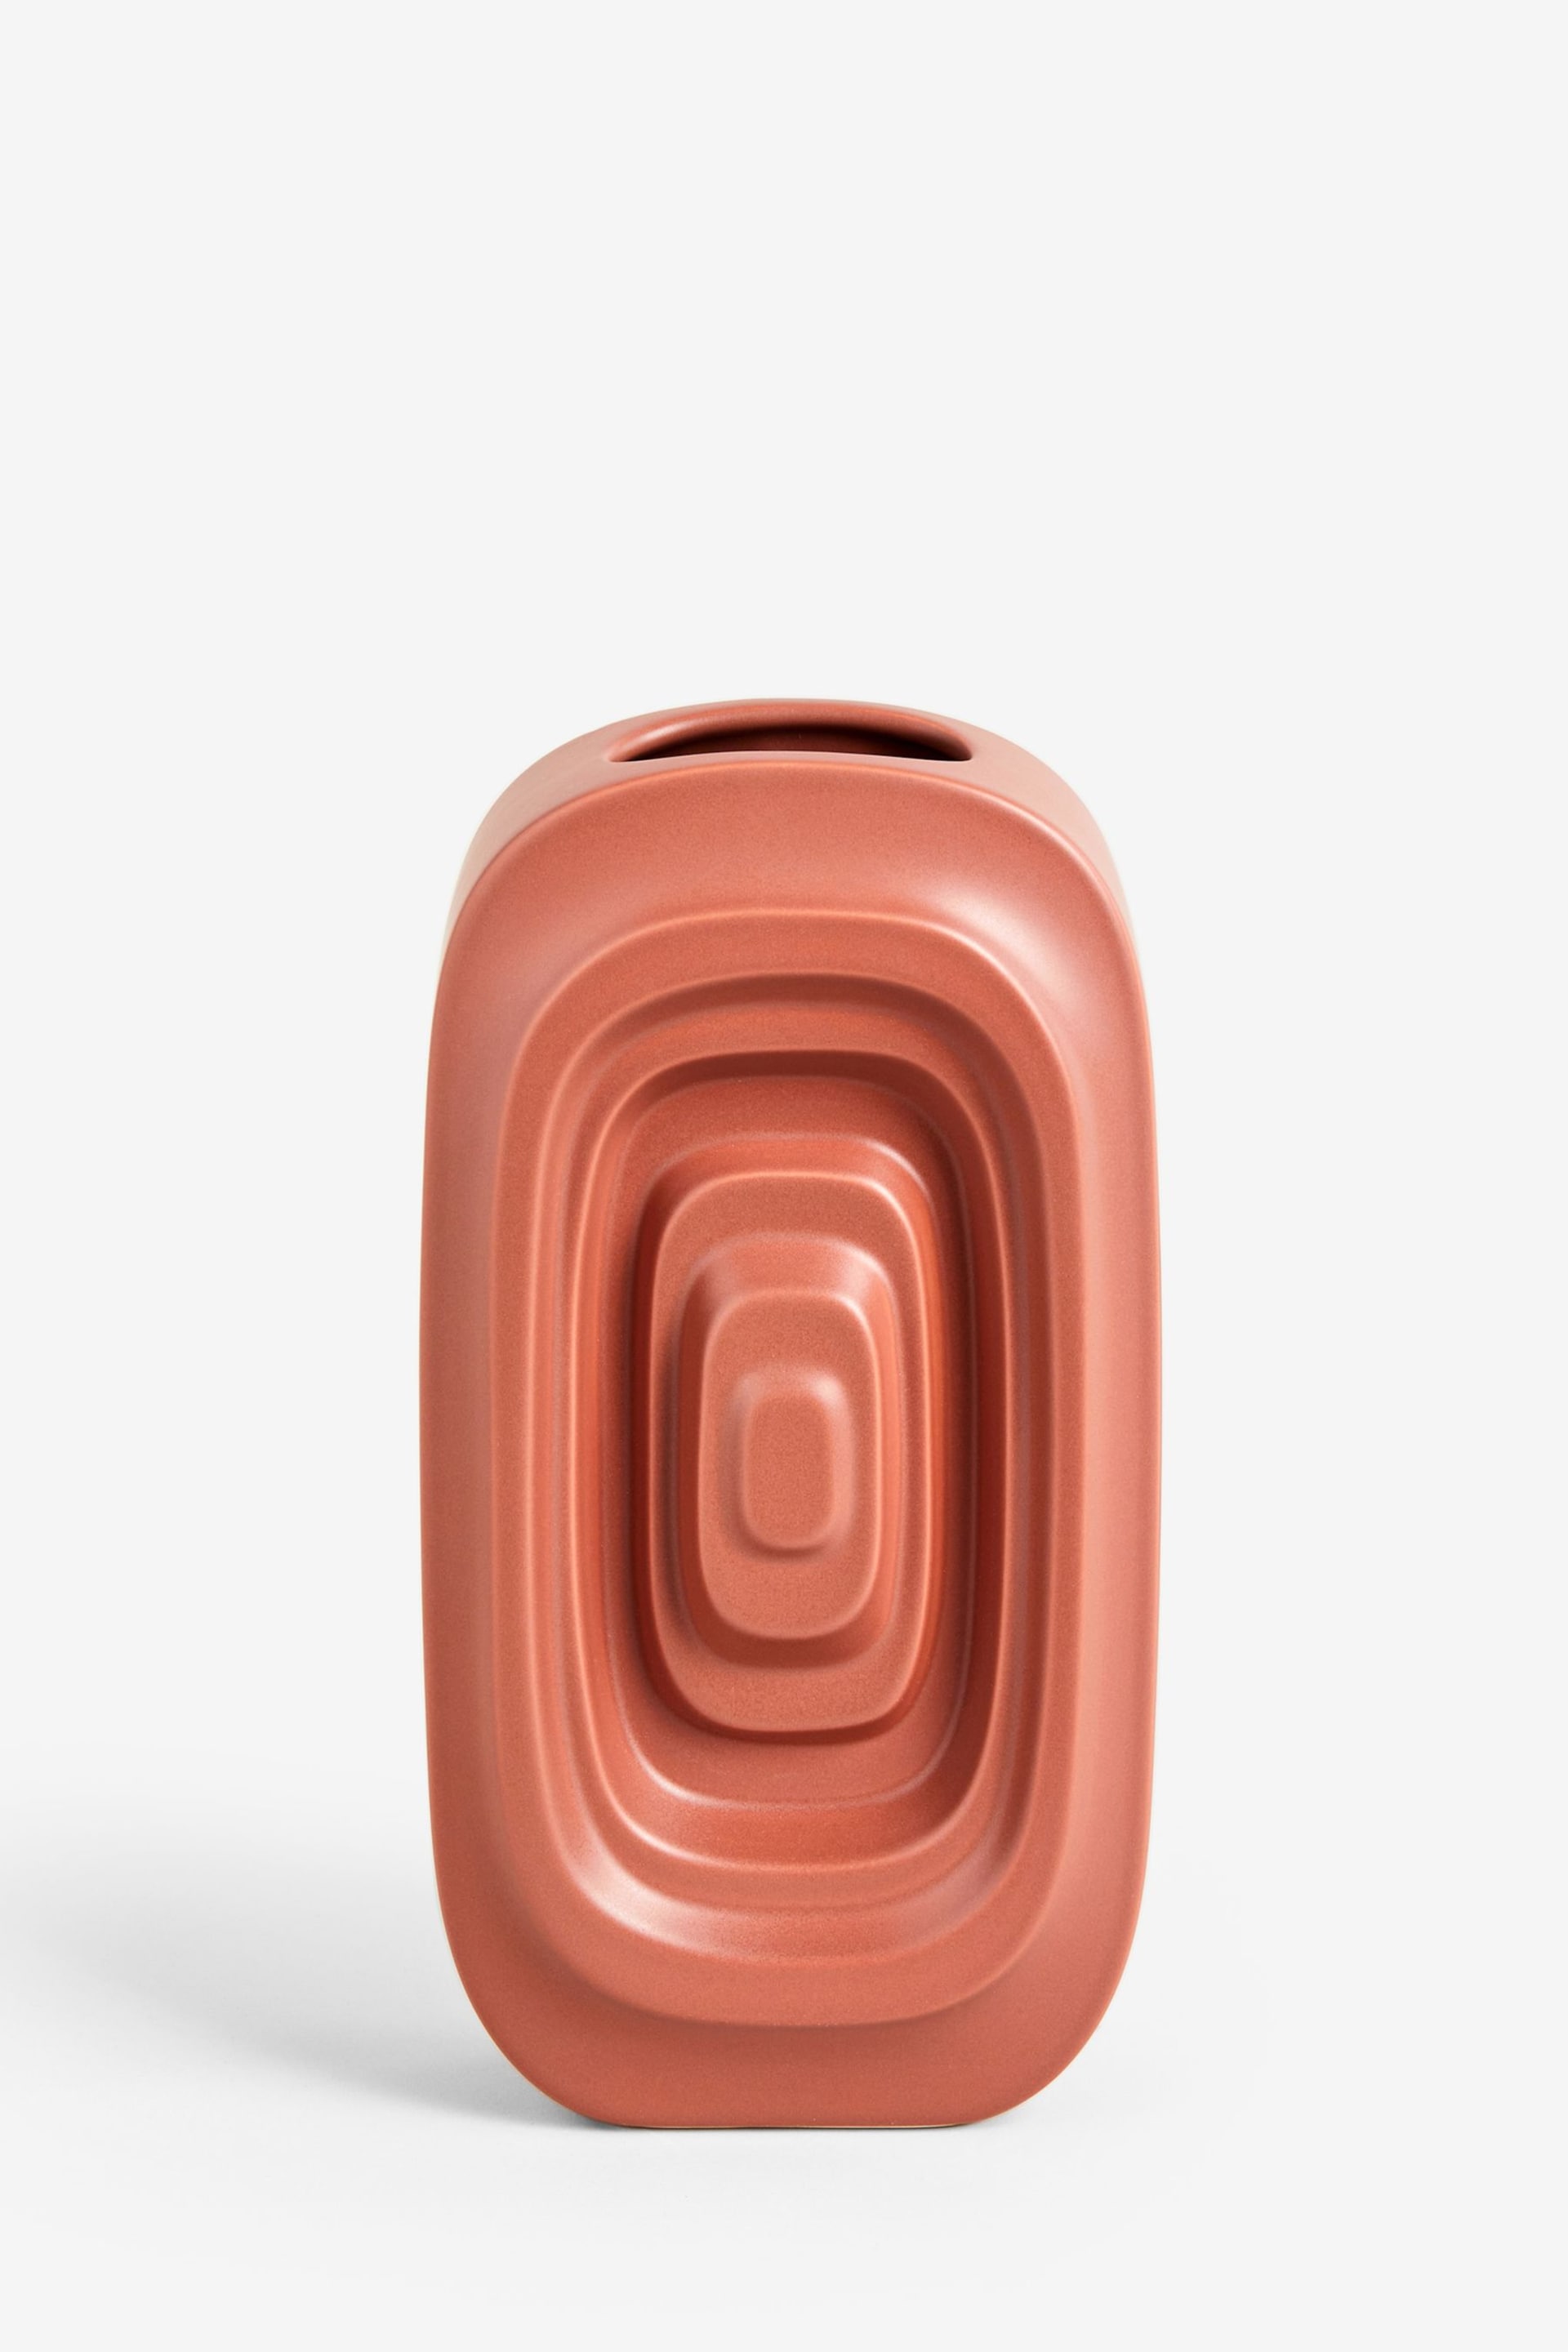 Orange Retro Shaped Ceramic Flower Vase - Image 4 of 5